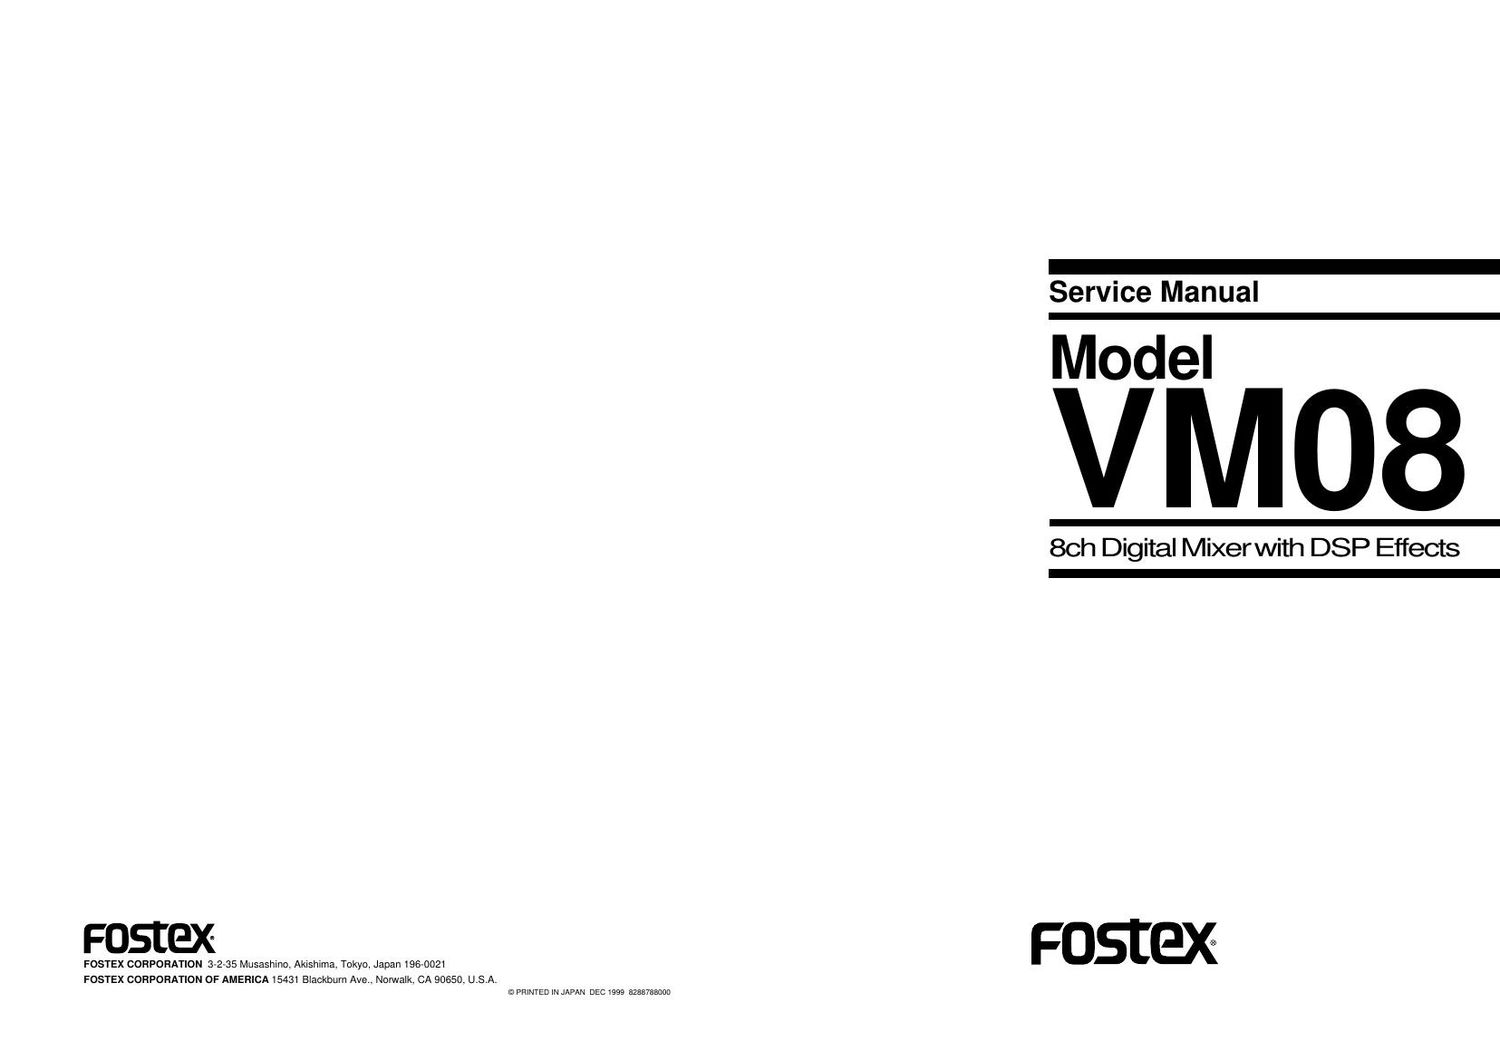 fostex vm08 8ch digital mixer service manual